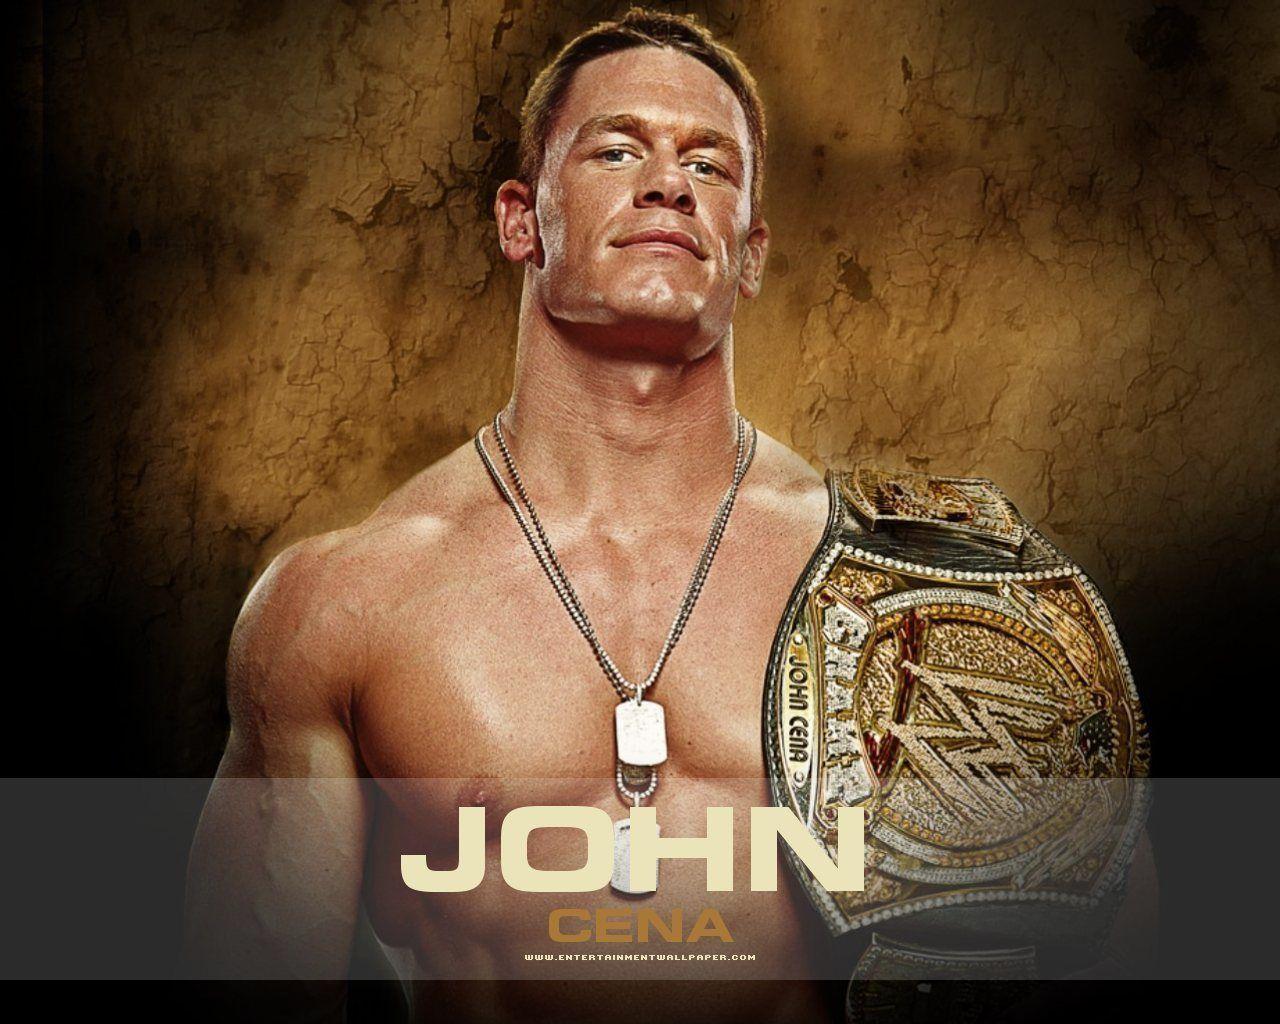 John Cena Wallpaper. Free Software. Free IDM Forever